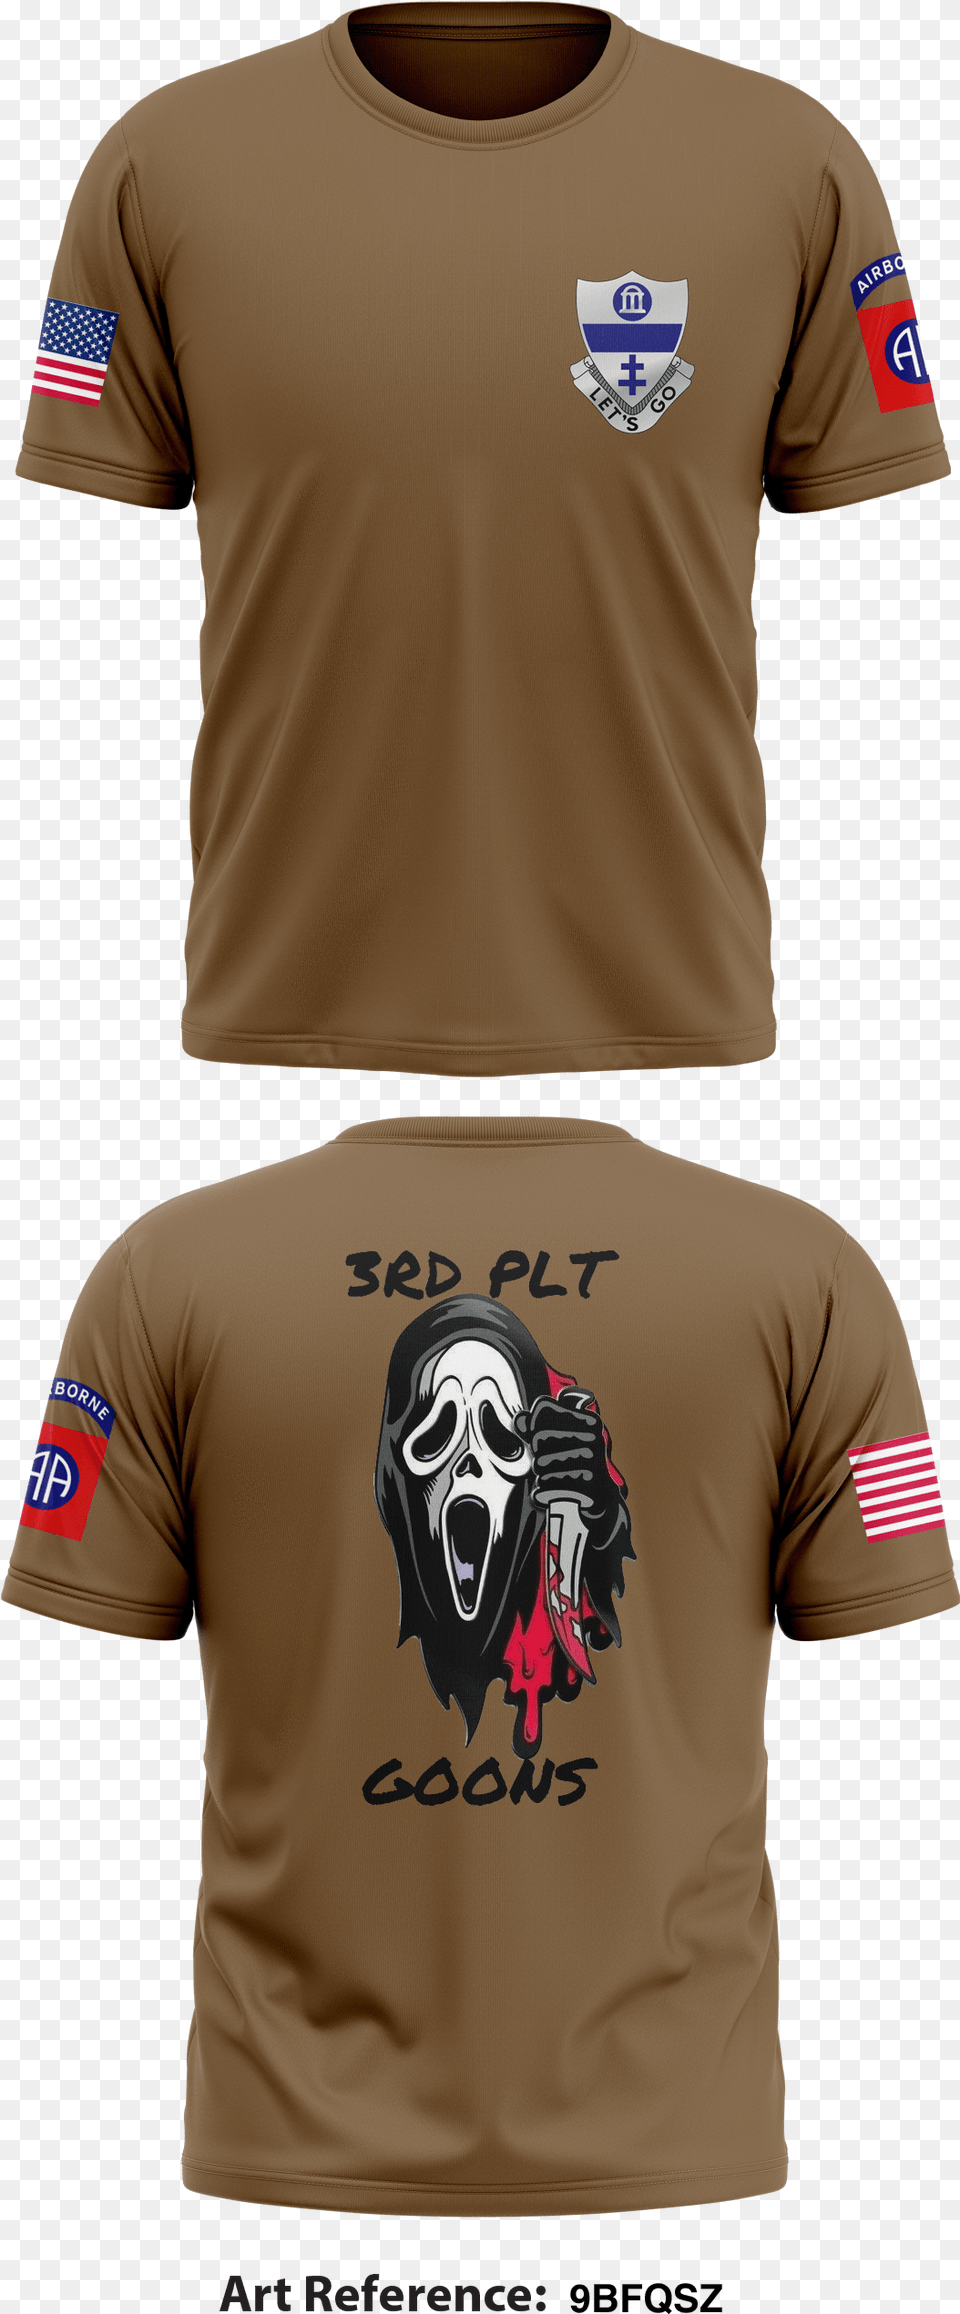 325 Air Charlie Company 3rd Platoon 2nd Brigade 82nd West Point Shirts, Clothing, Shirt, T-shirt Png